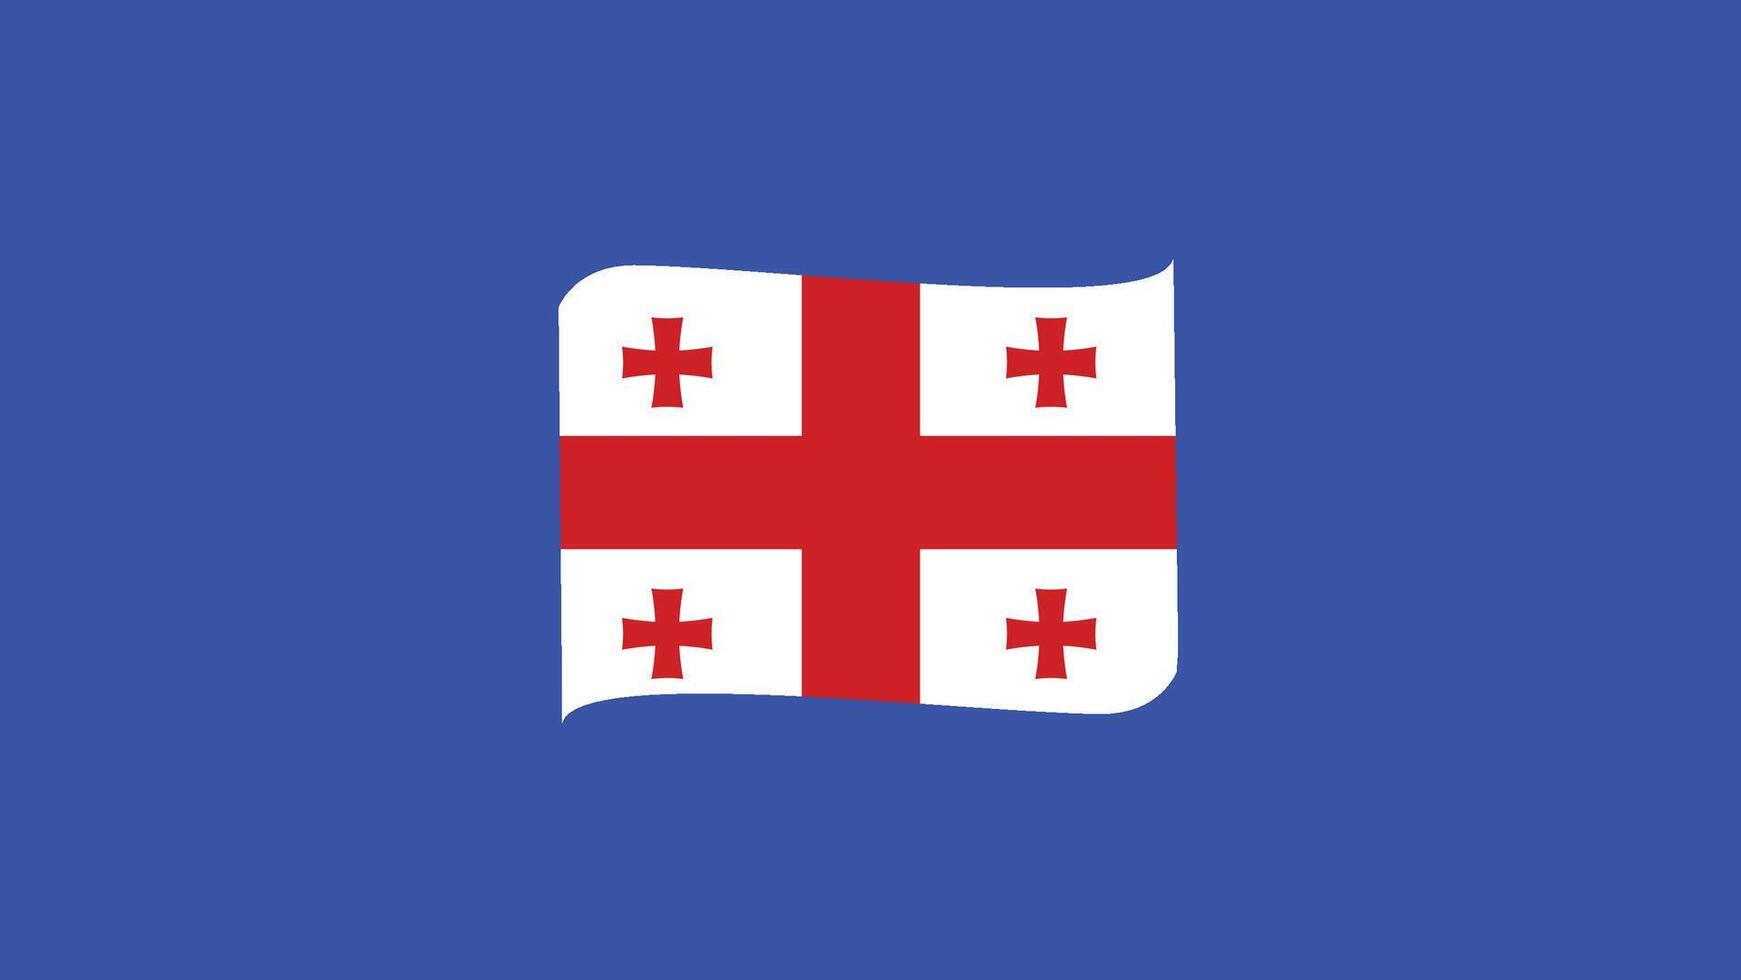 Georgië vlag lint Europese landen 2024 teams landen Europese Duitsland Amerikaans voetbal symbool logo ontwerp illustratie vector